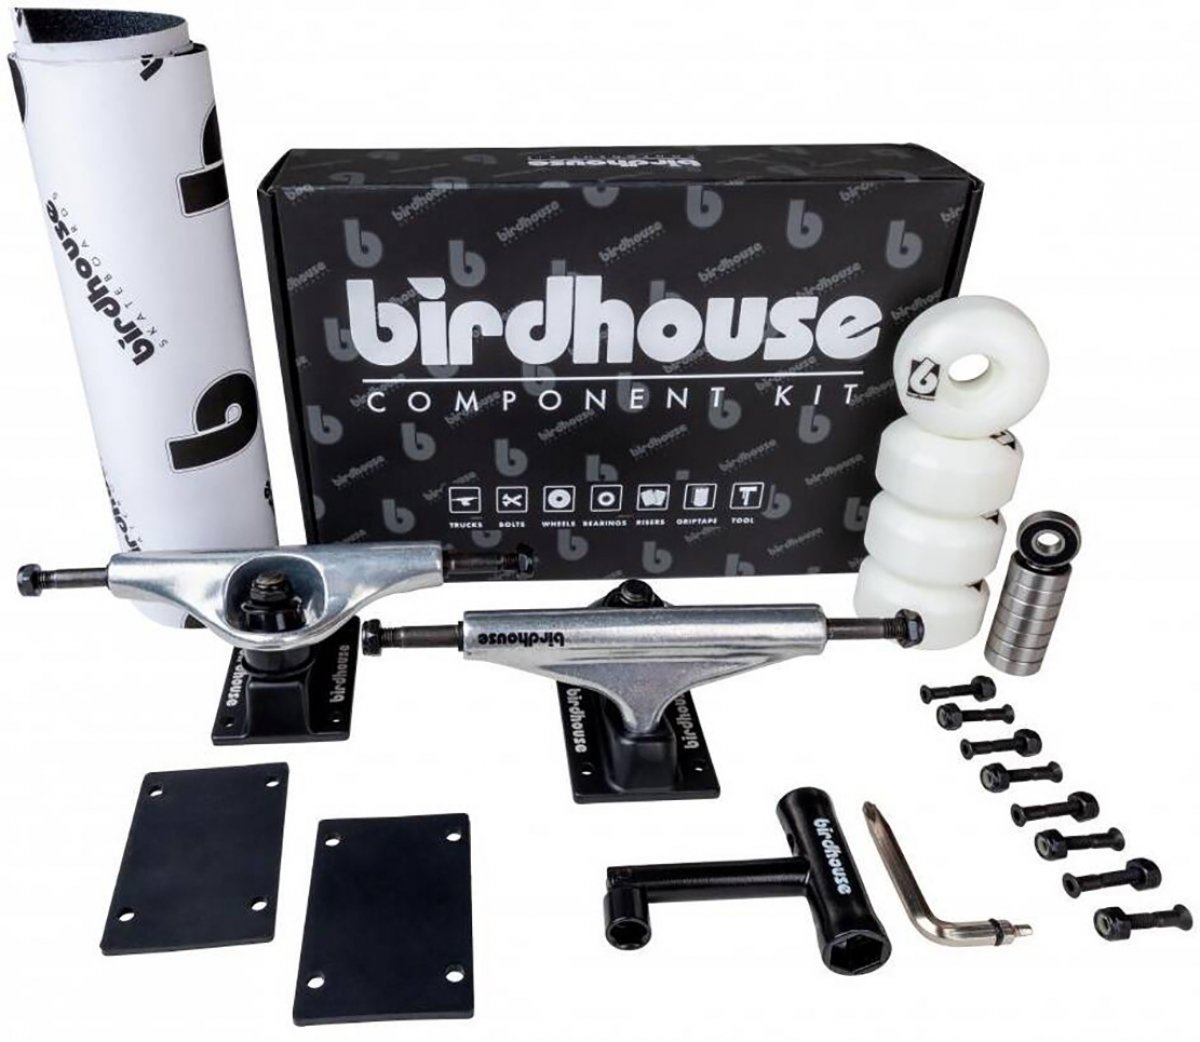 CREA IL TUO SKATE COMPLETO professionale -Birdhouse Kit Set Up Skate Component Kit 5.25 Silver/Black Birdhouse Kit Set Up